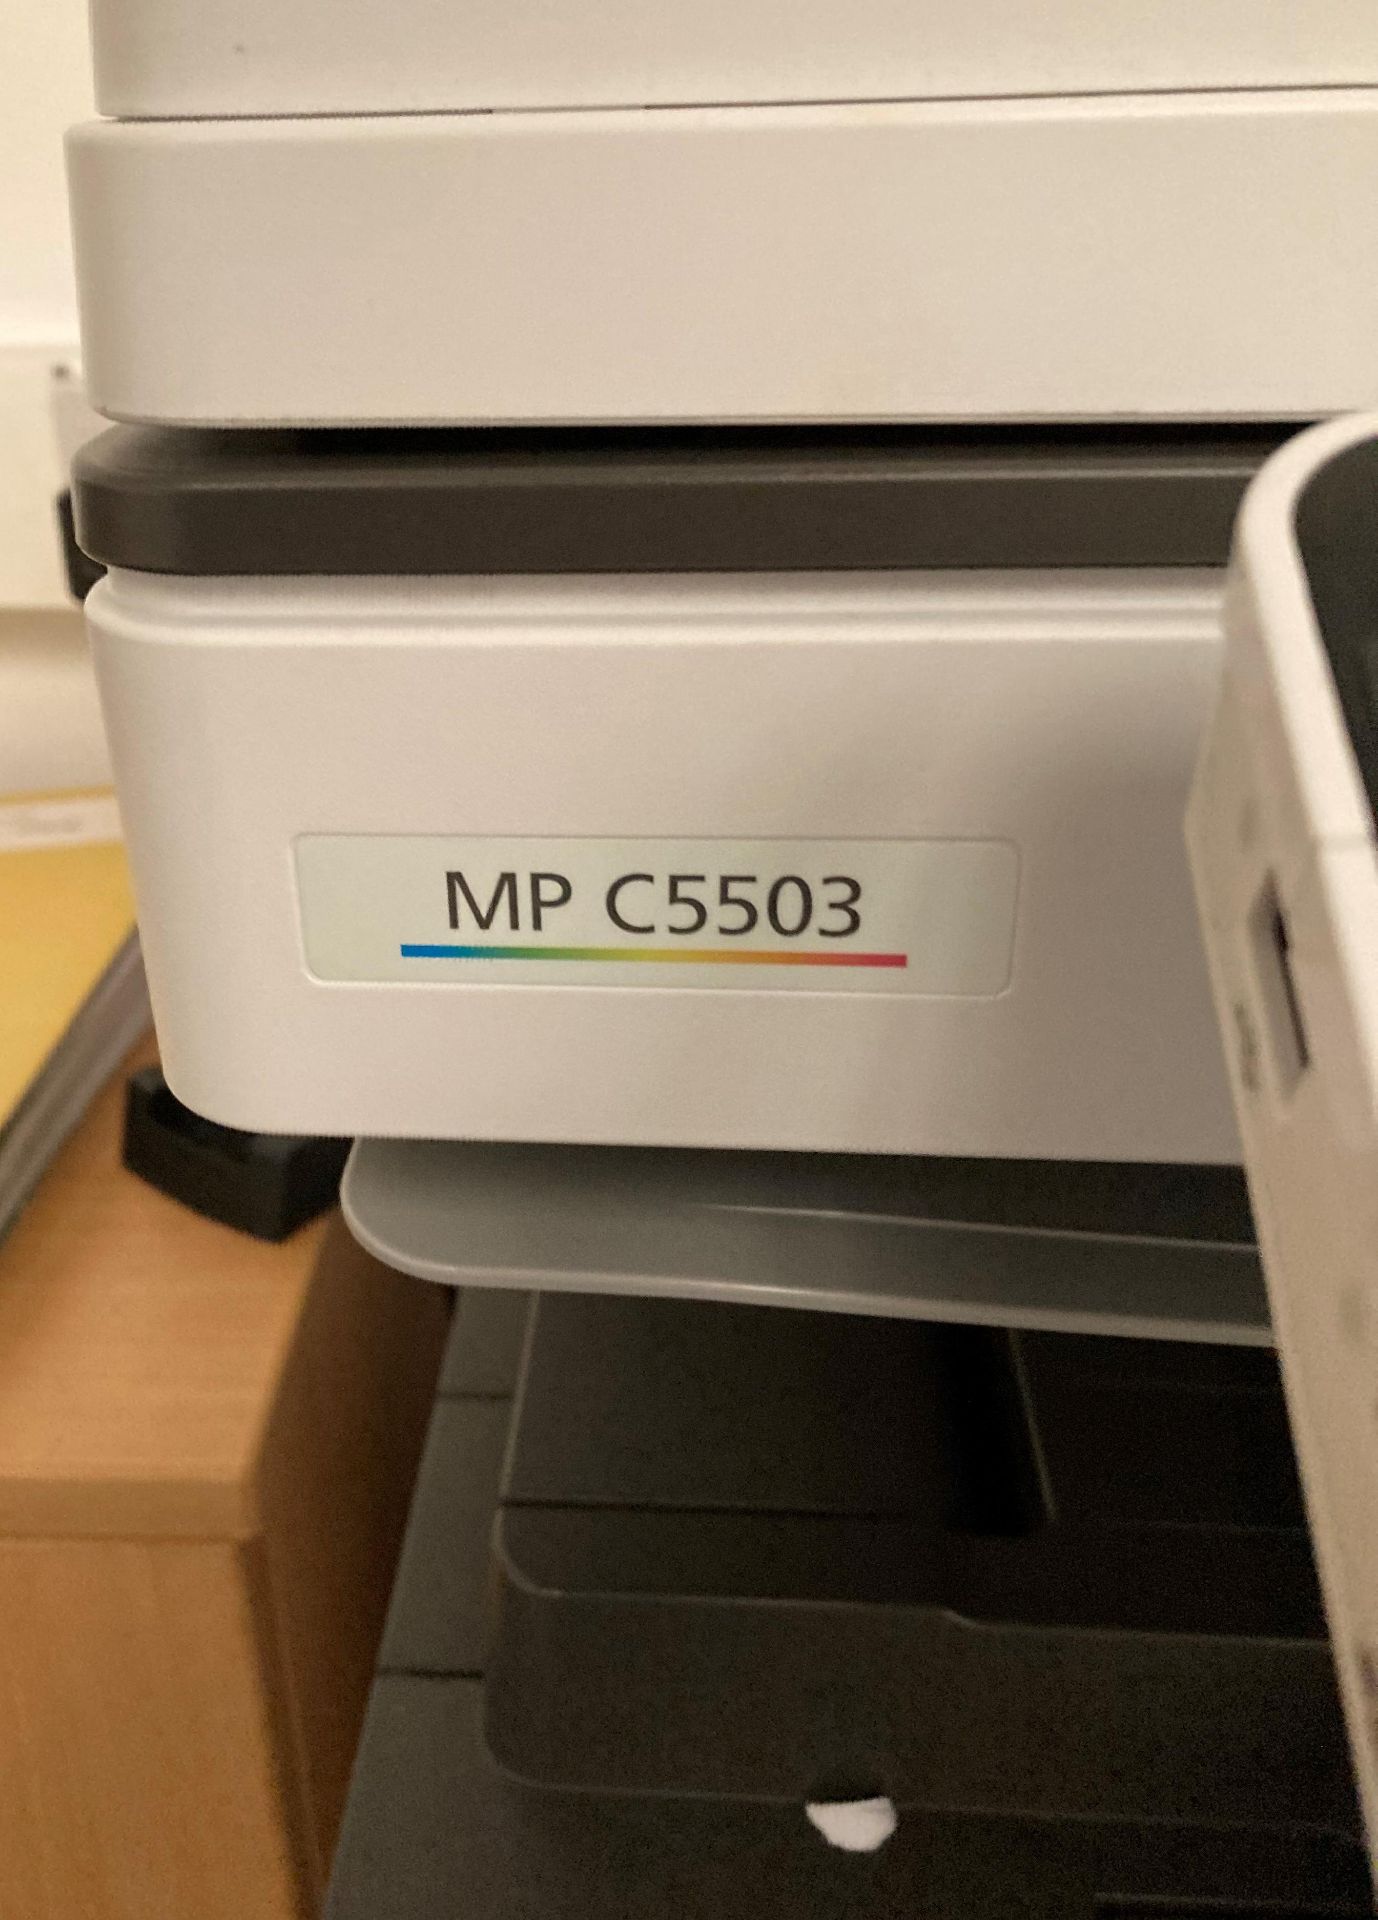 Ricoh MP C5503 copy print scan photocopier (collection address: Unit 6A, Church Street, Mexborough, - Image 2 of 3